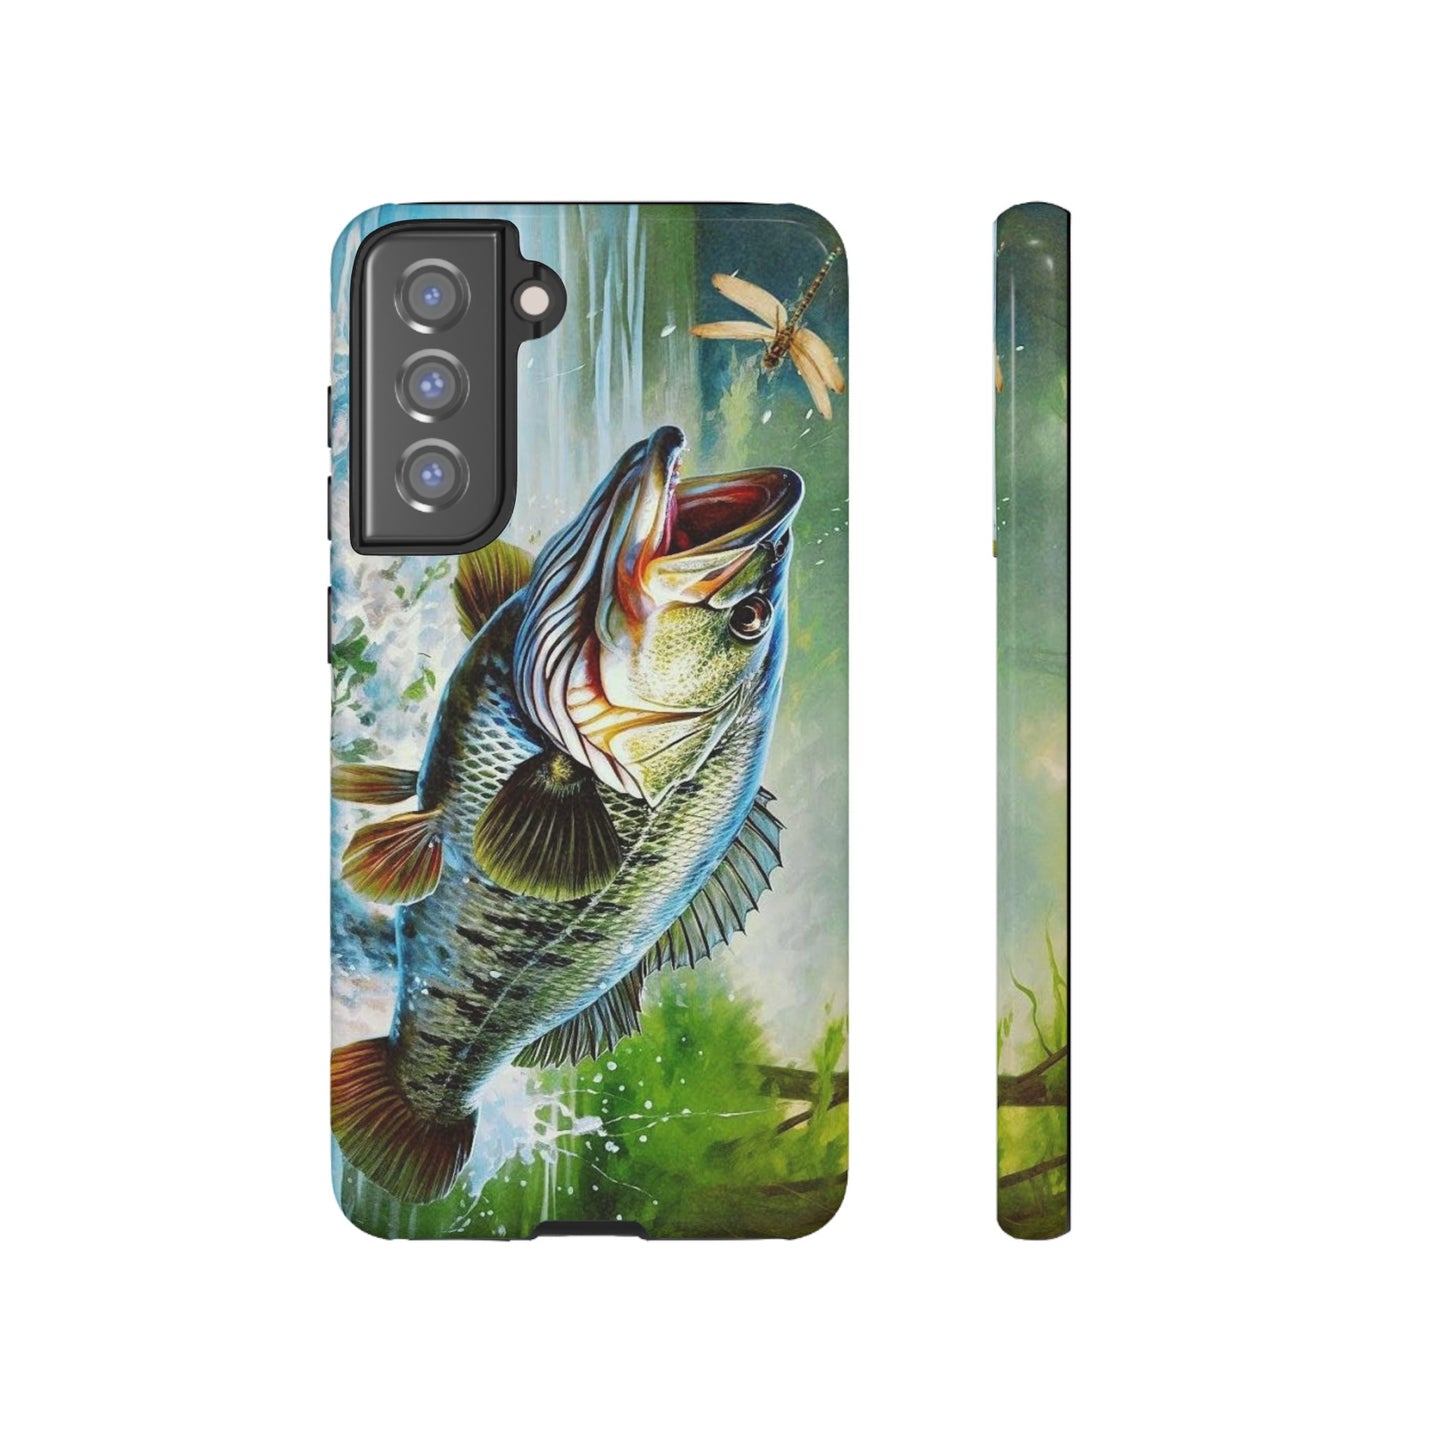 Fishing Phone Case, iPhone Case, Samsung Case, Google Pixel Case